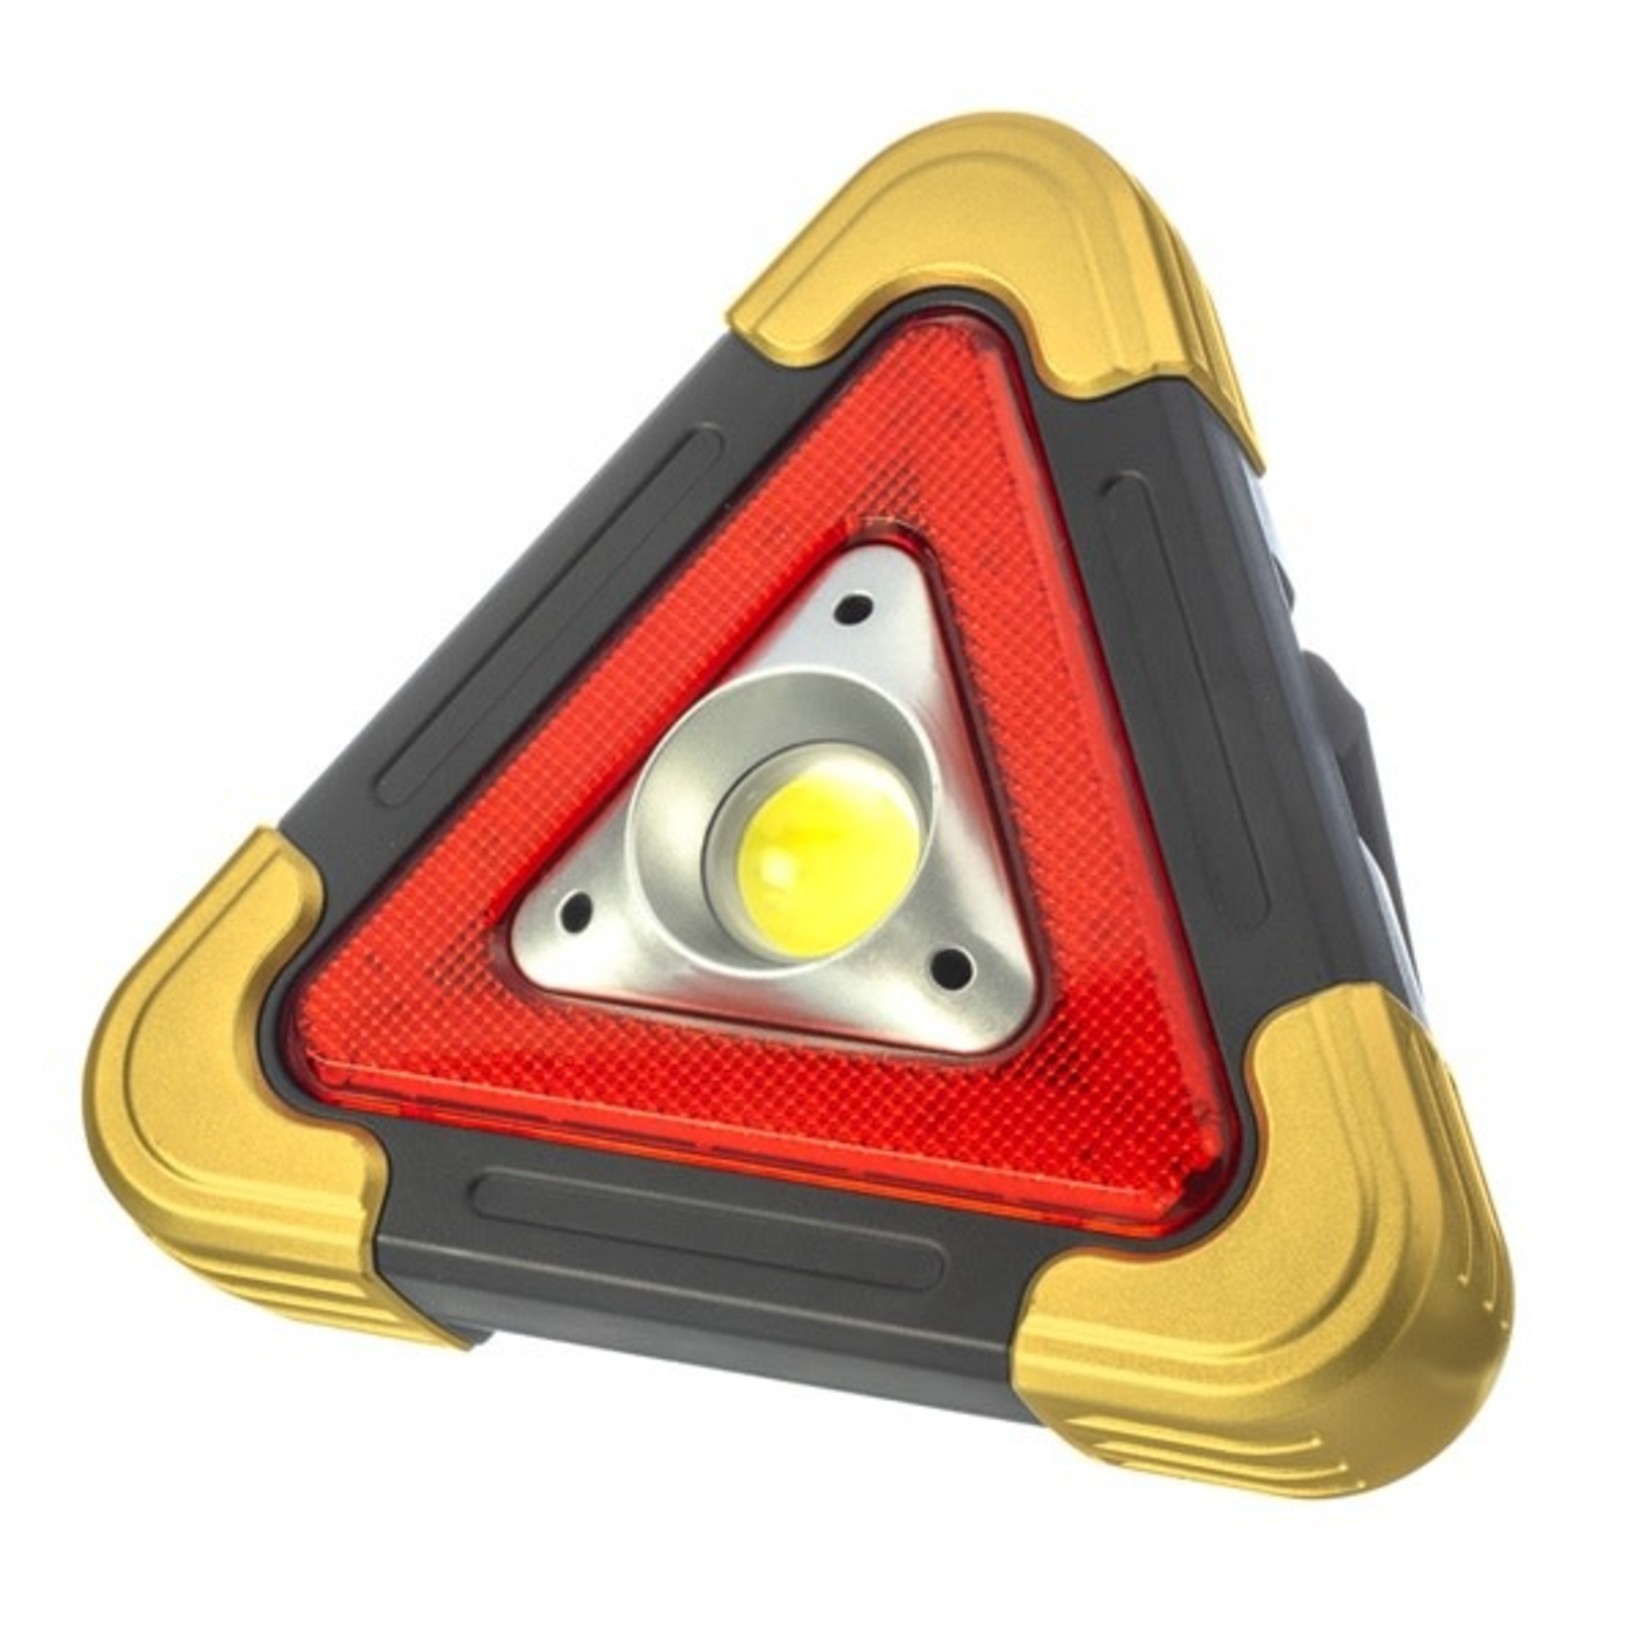 Sona SE Multifunction Worklight Safety Light 500 Lumen